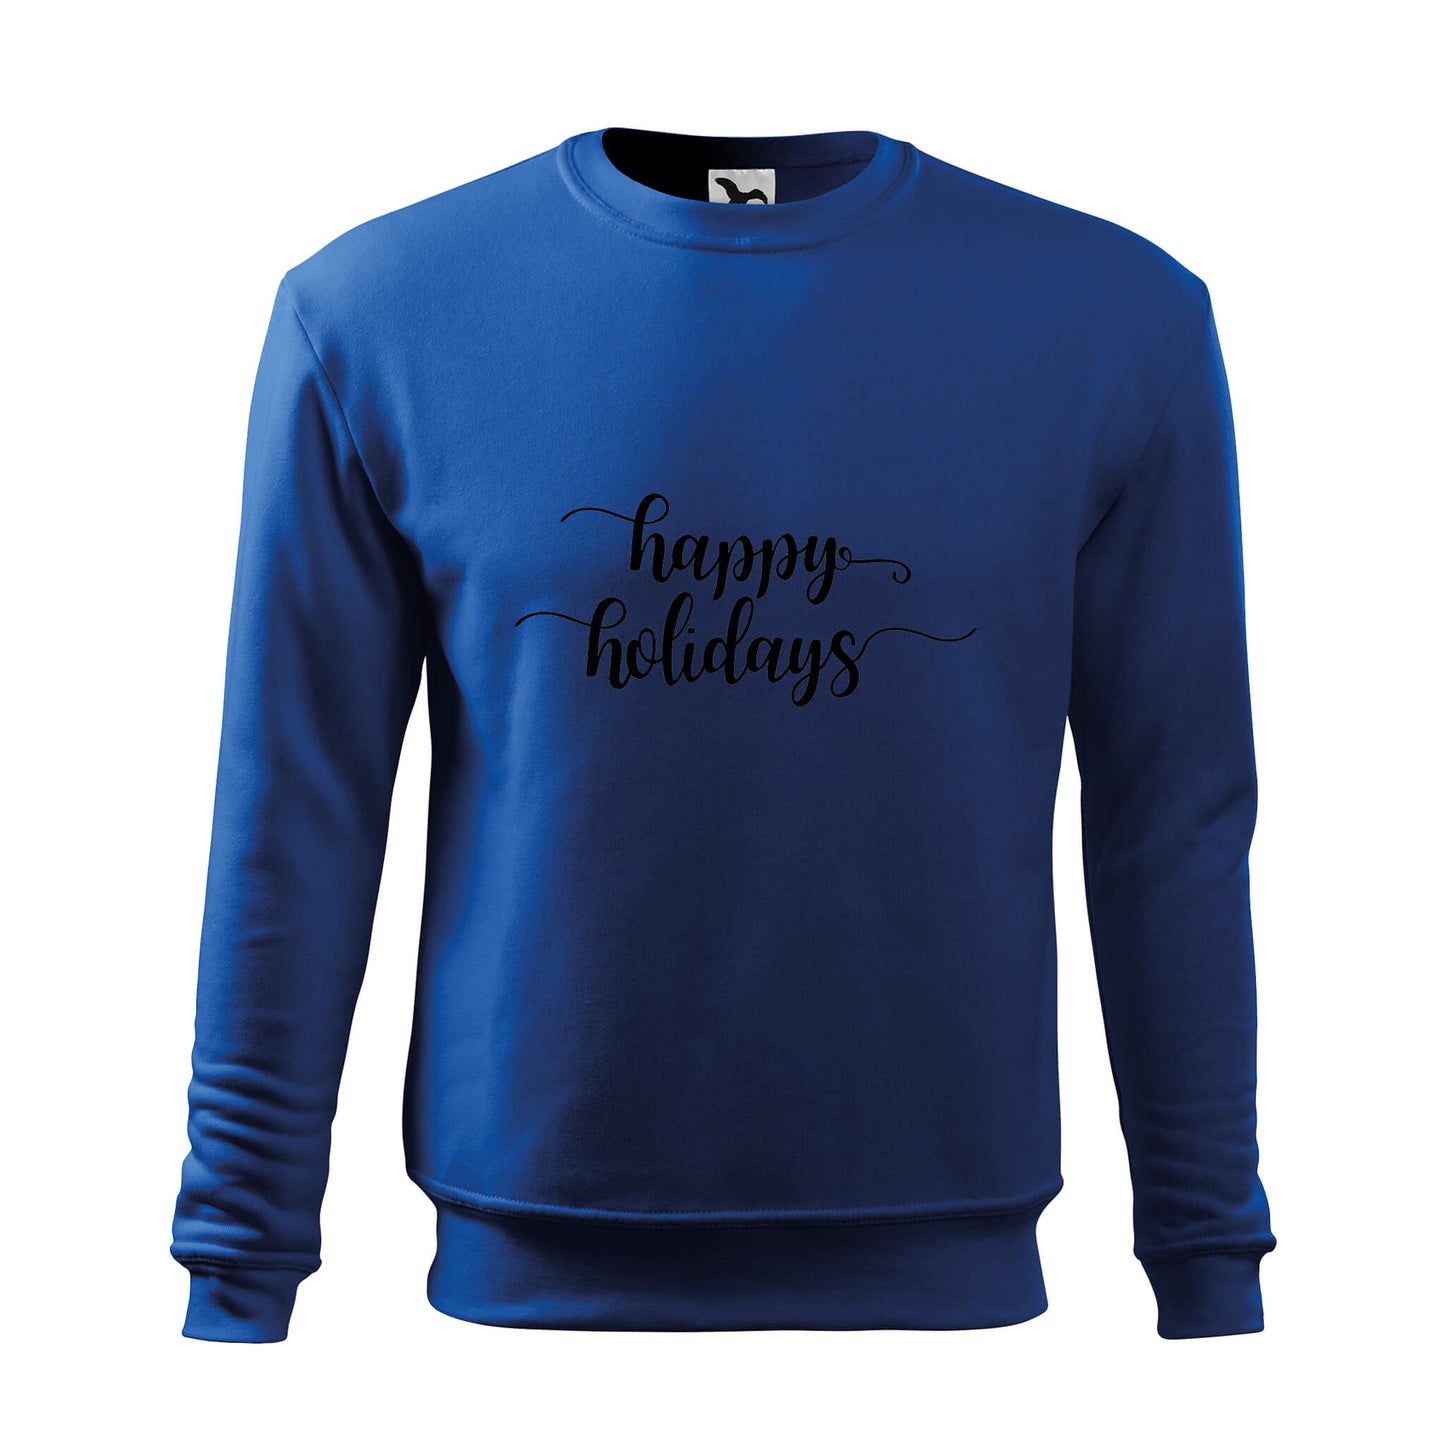 Happy holidays sweatshirt - rvdesignprint